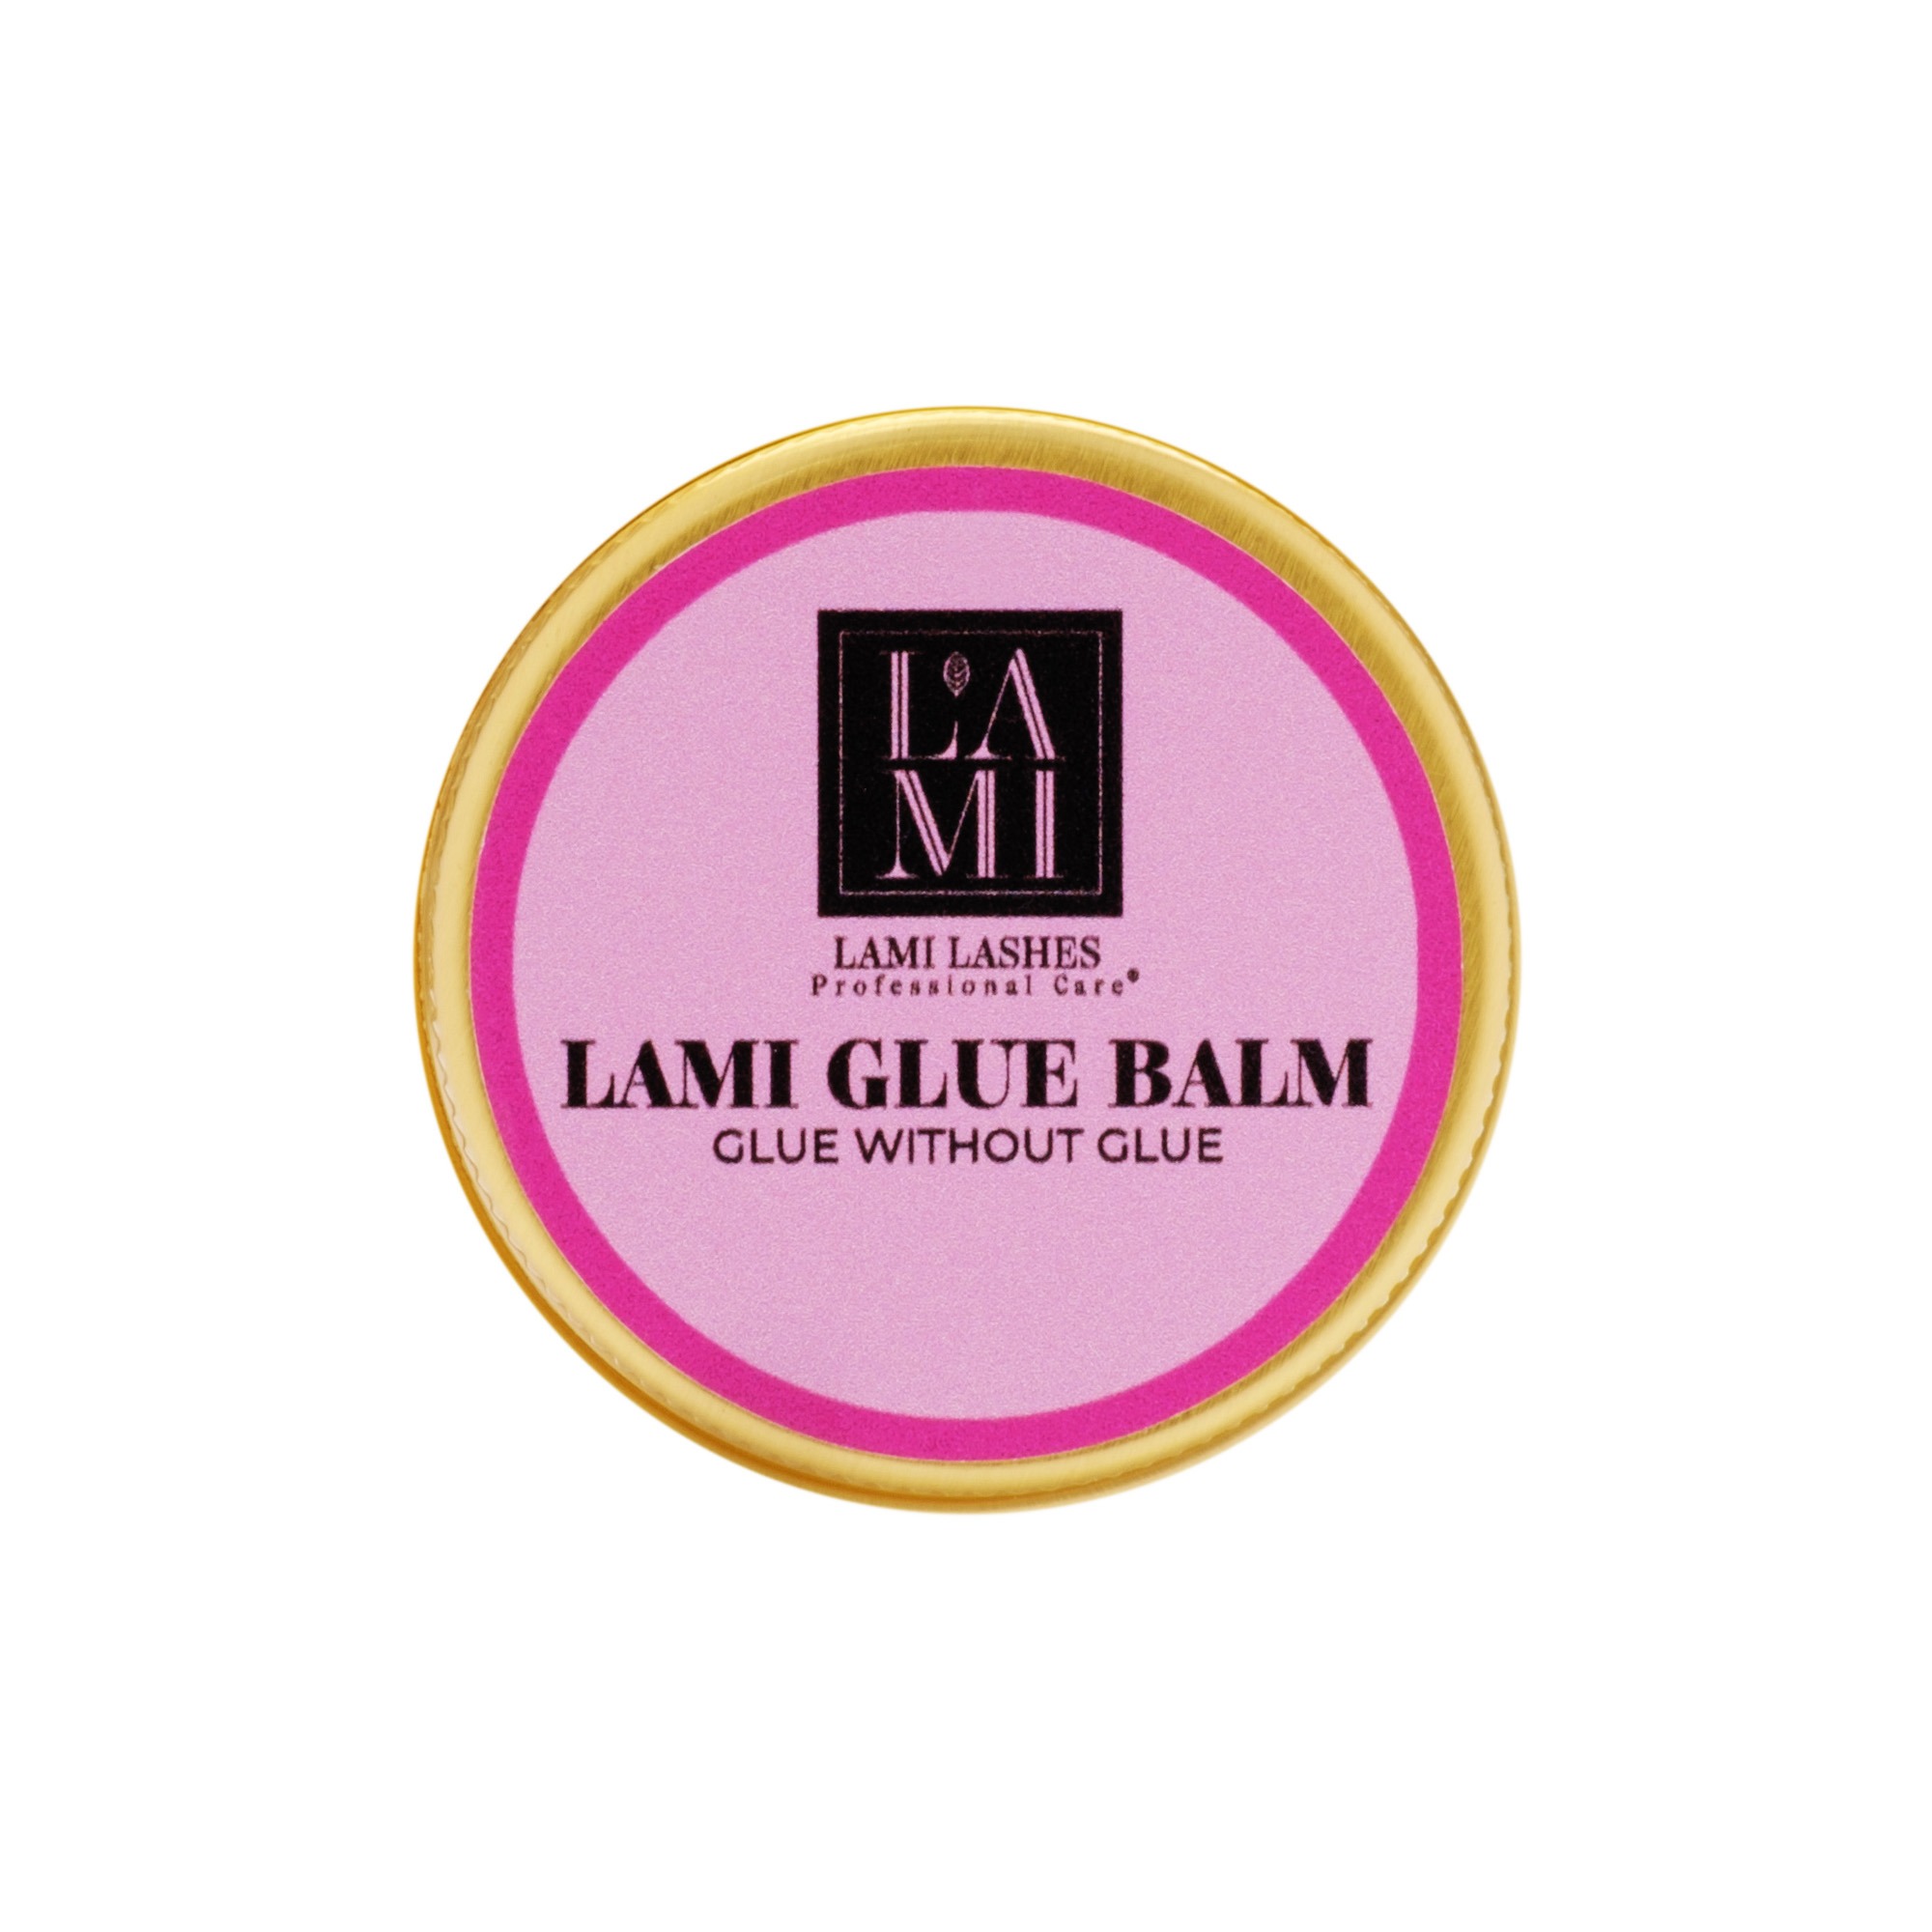 Lami Lashes – Lami Glue Balm- Klej balsam do laminacji i liftingu rzęs, 20 ml